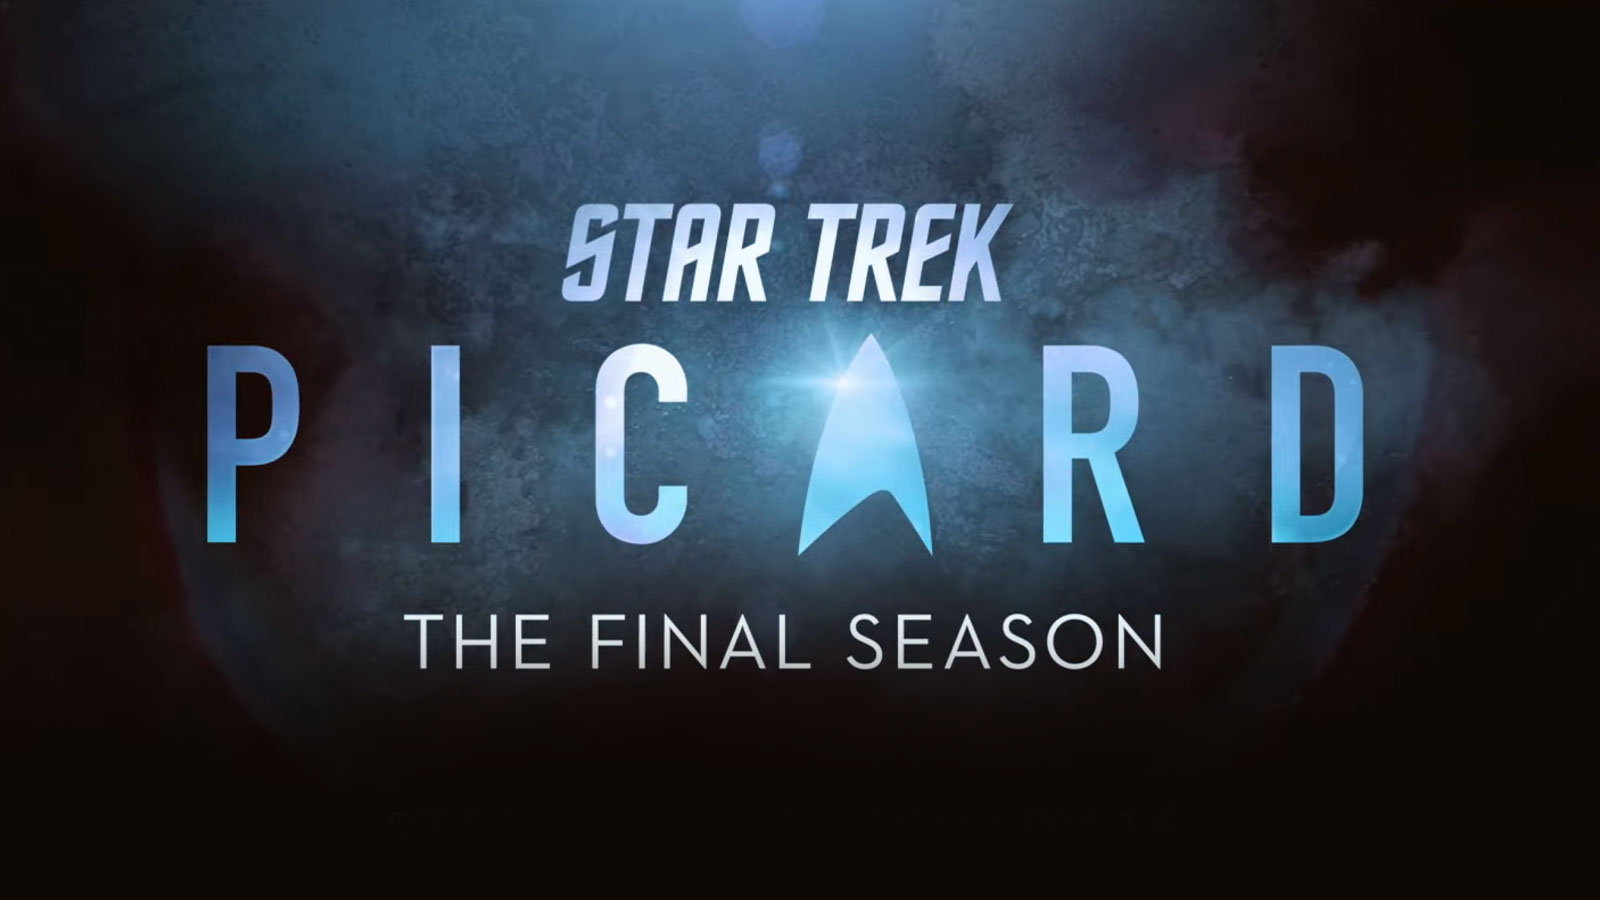 New Star Trek: Picard Season 3 trailer drops at New York Comic Con